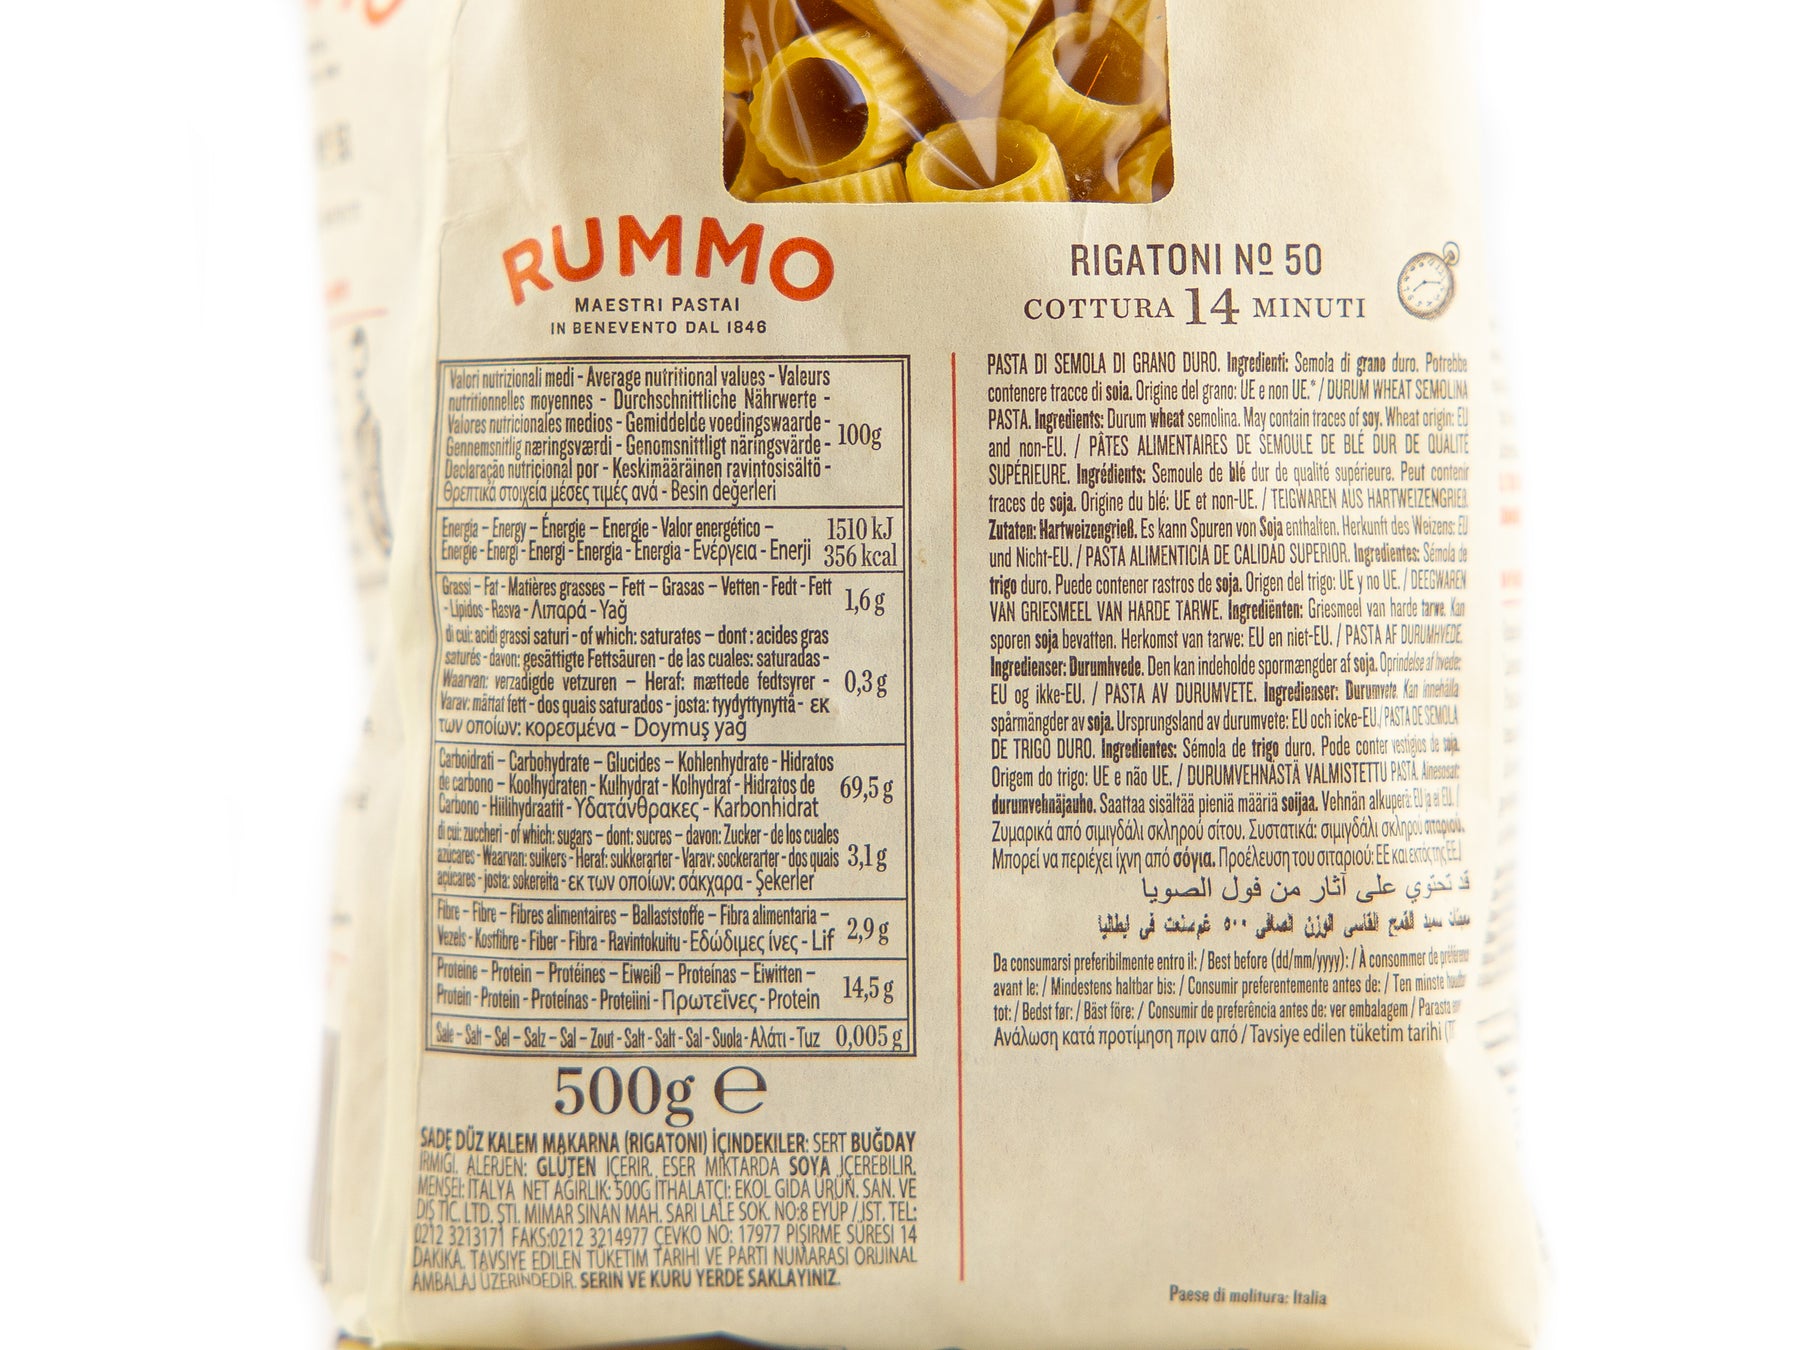 Rummo Rigatoni N°50, Nudeln aus Hartweizengrieß ohne Ei (vegane Pasta)